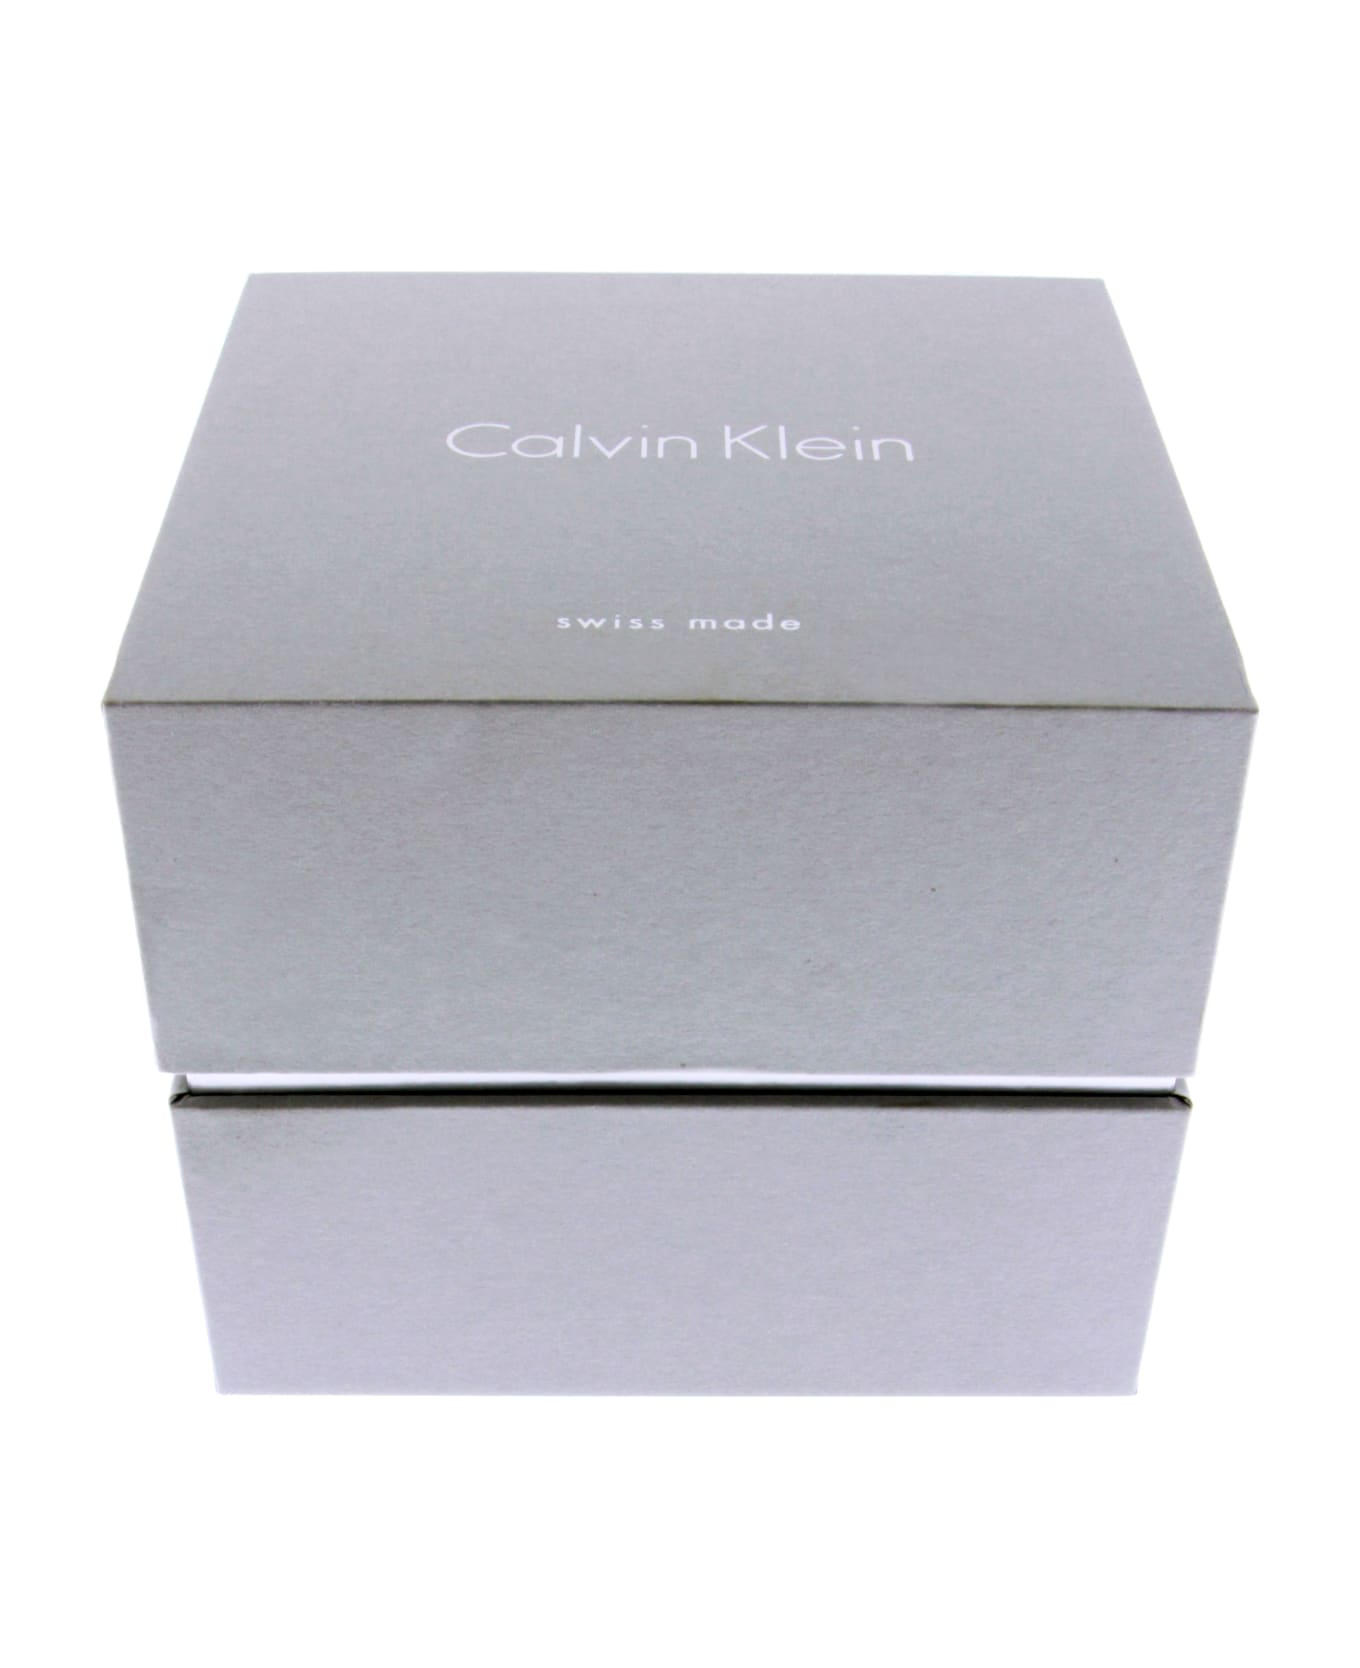 Calvin Klein K4n21146 Time Watches